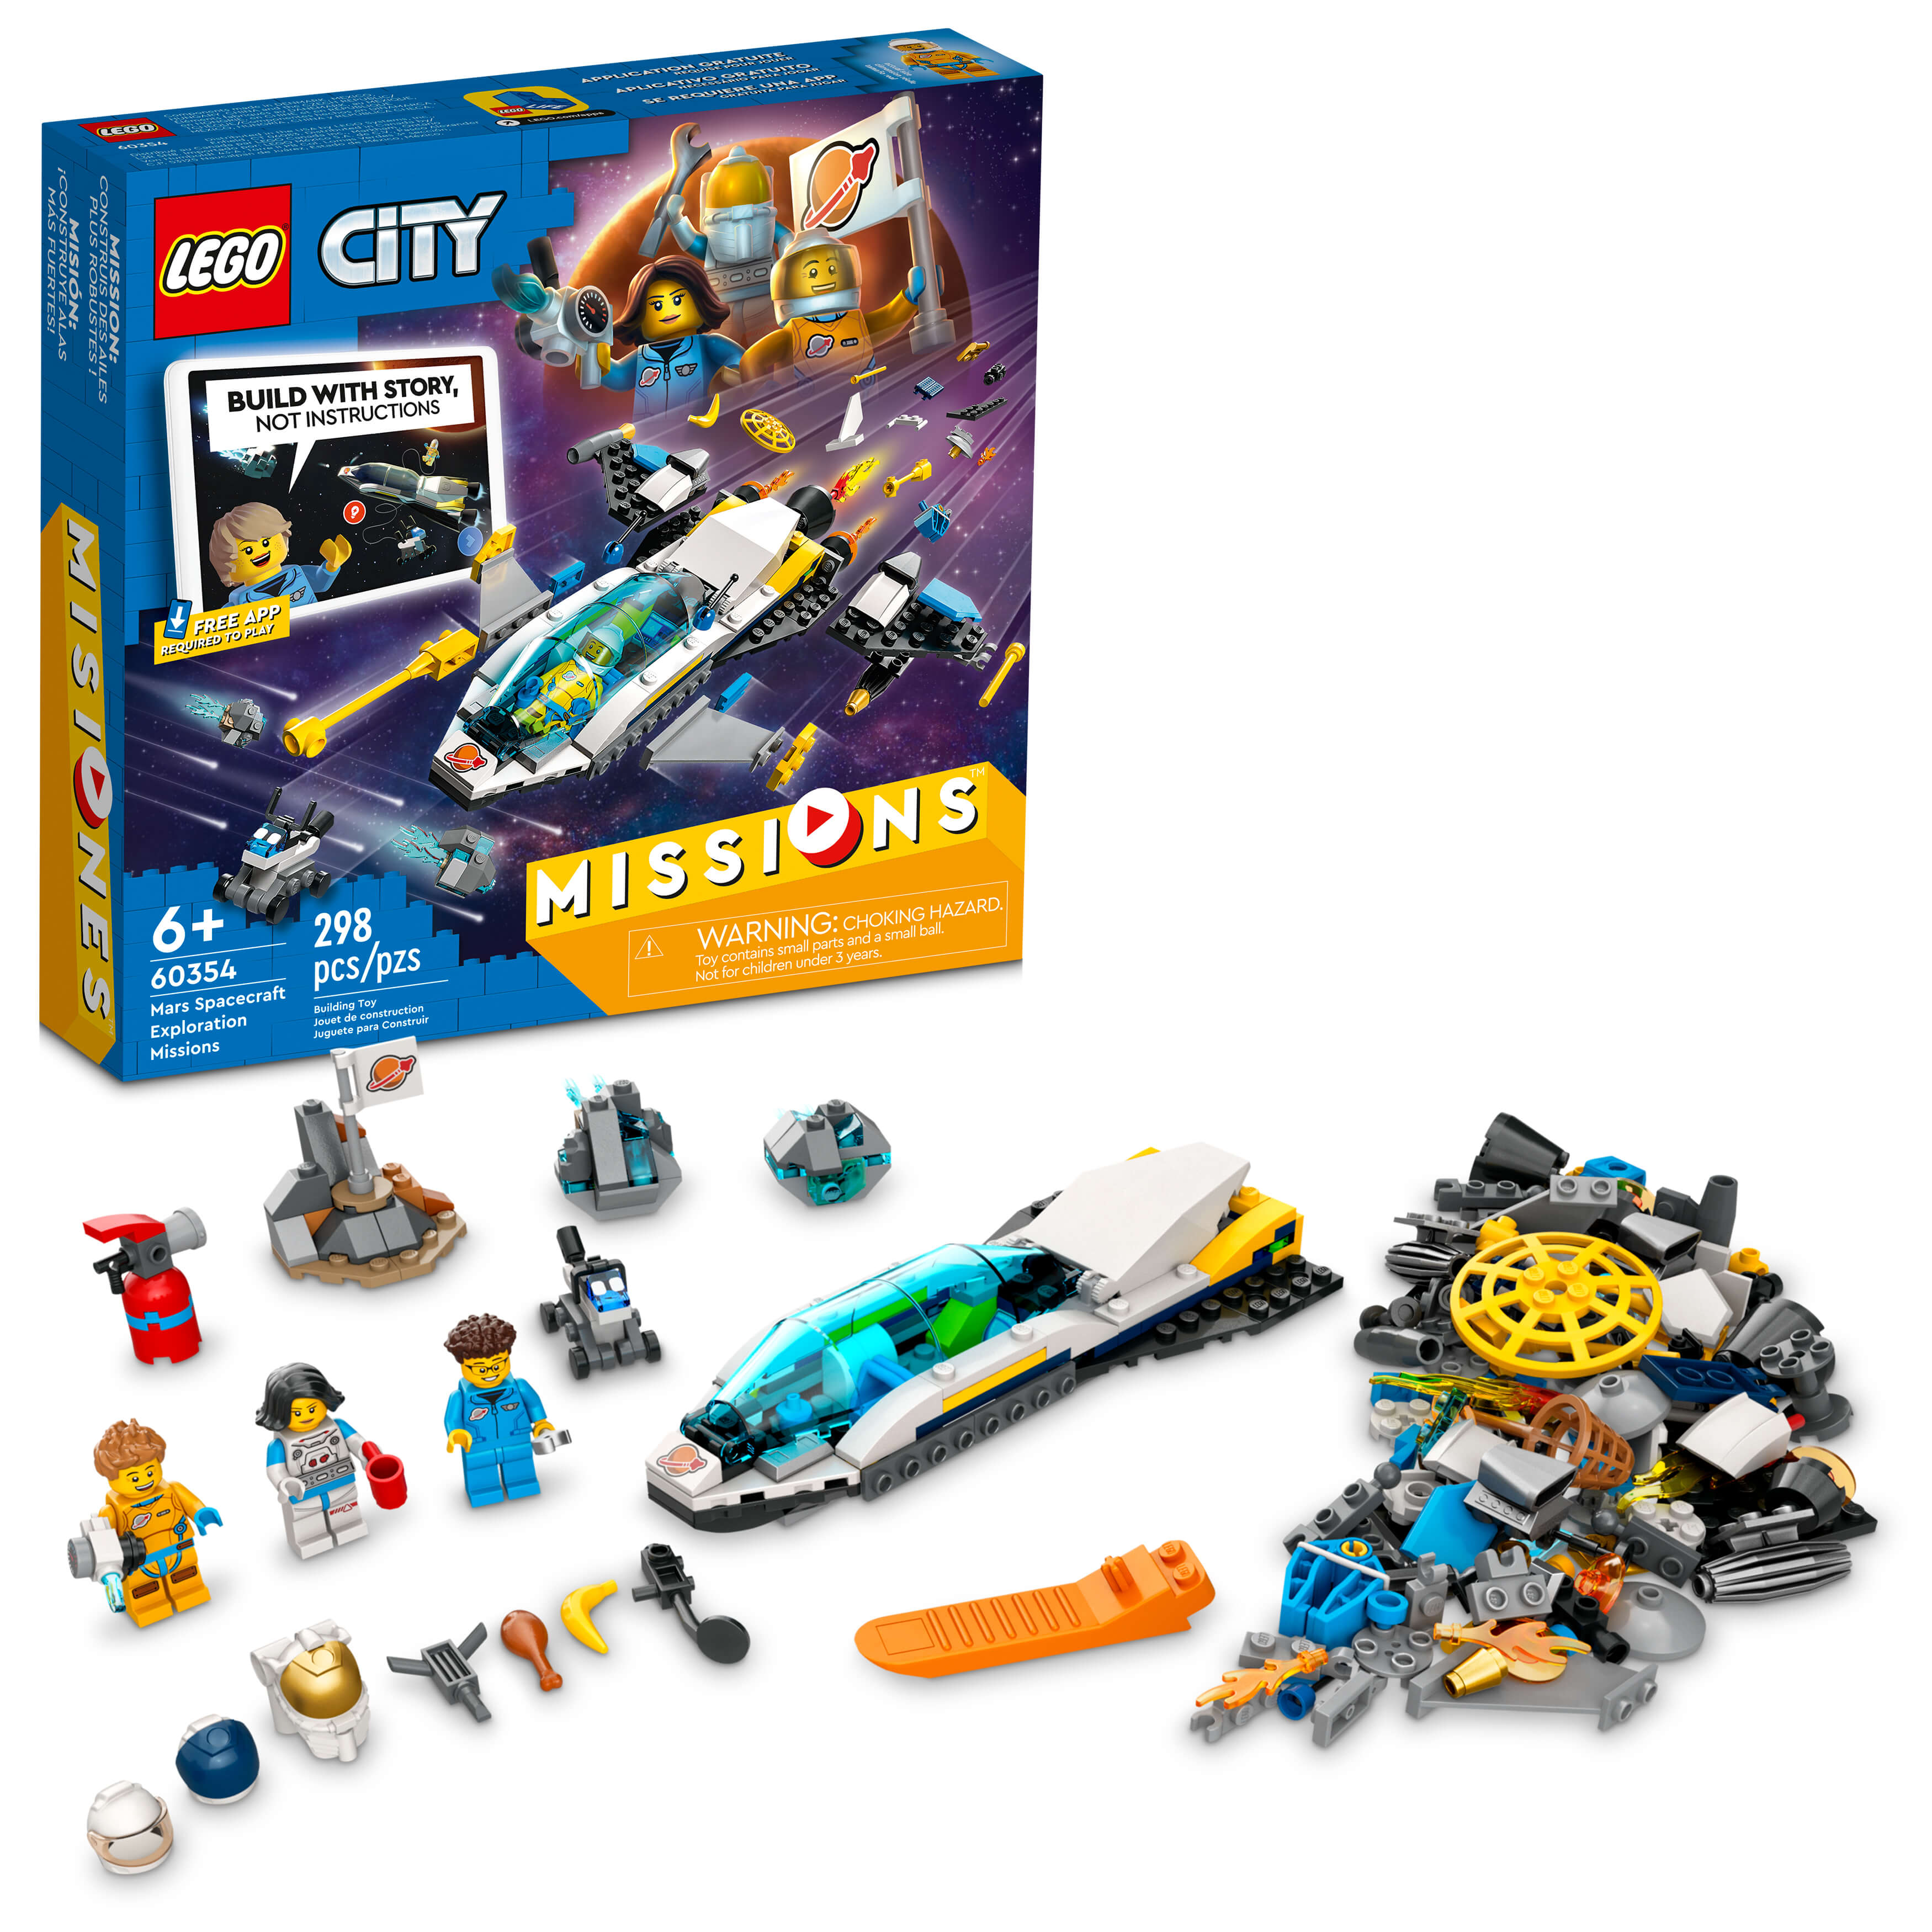 LEGO® City Mars Spacecraft Exploration Missions 60354 Building Kit (298 Pieces)